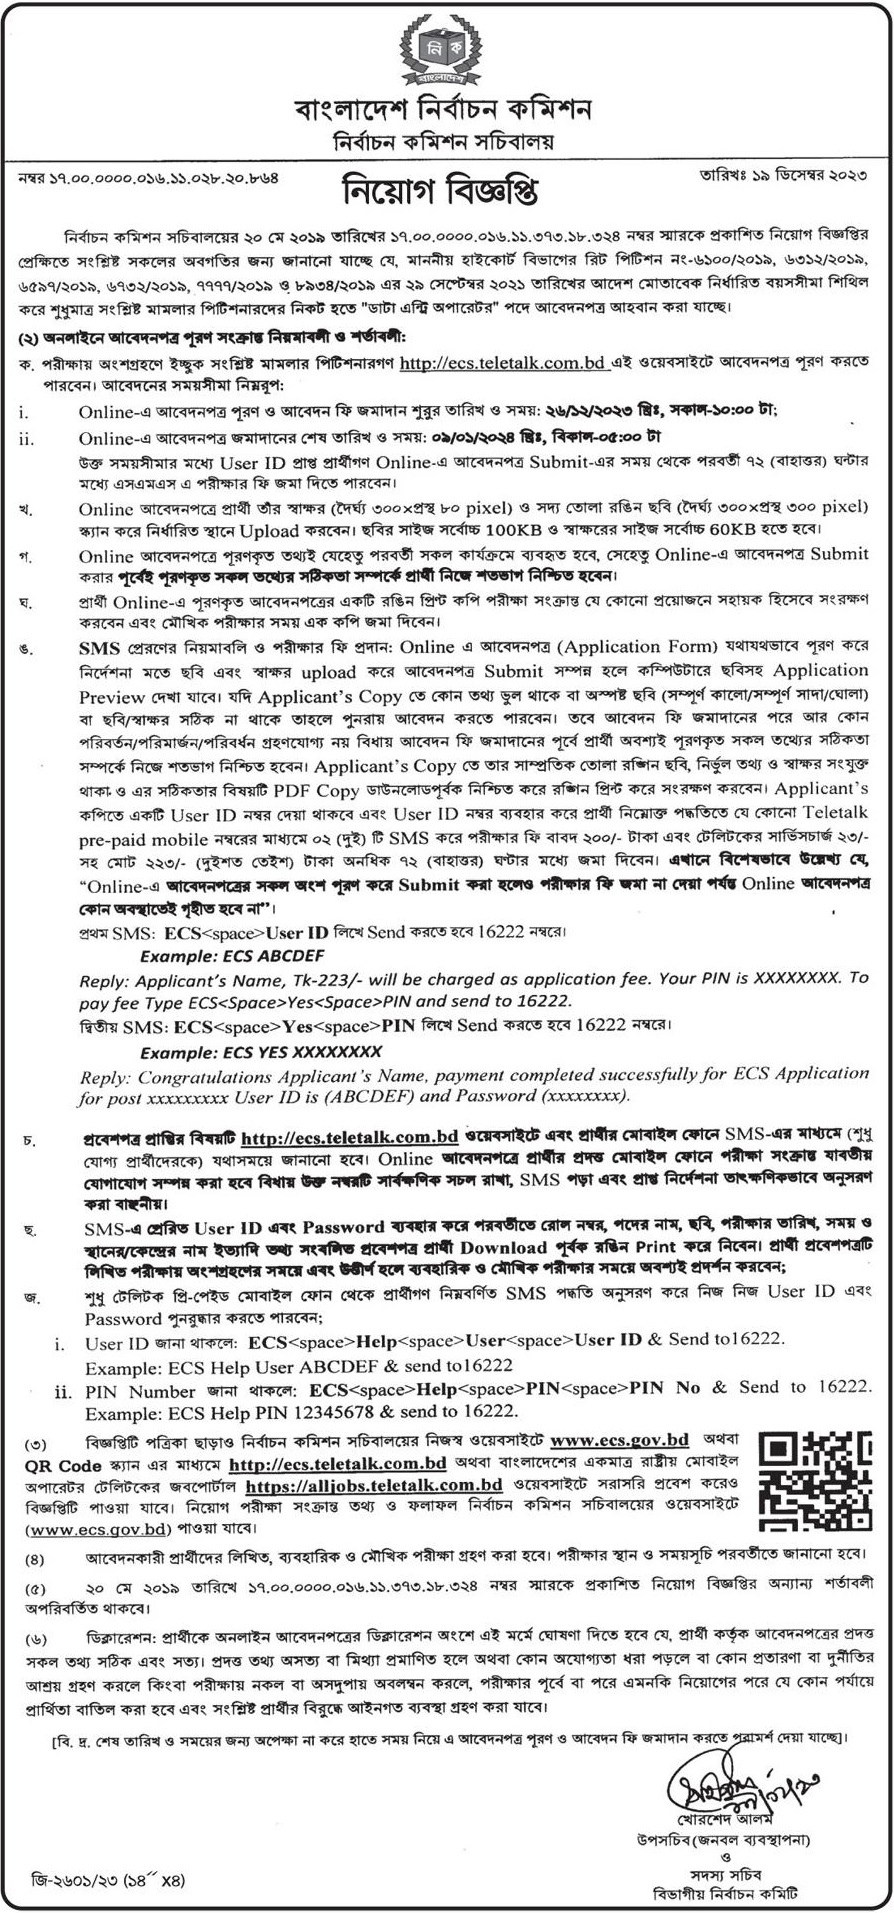 Bangladesh Election Commission Job Circular 2024